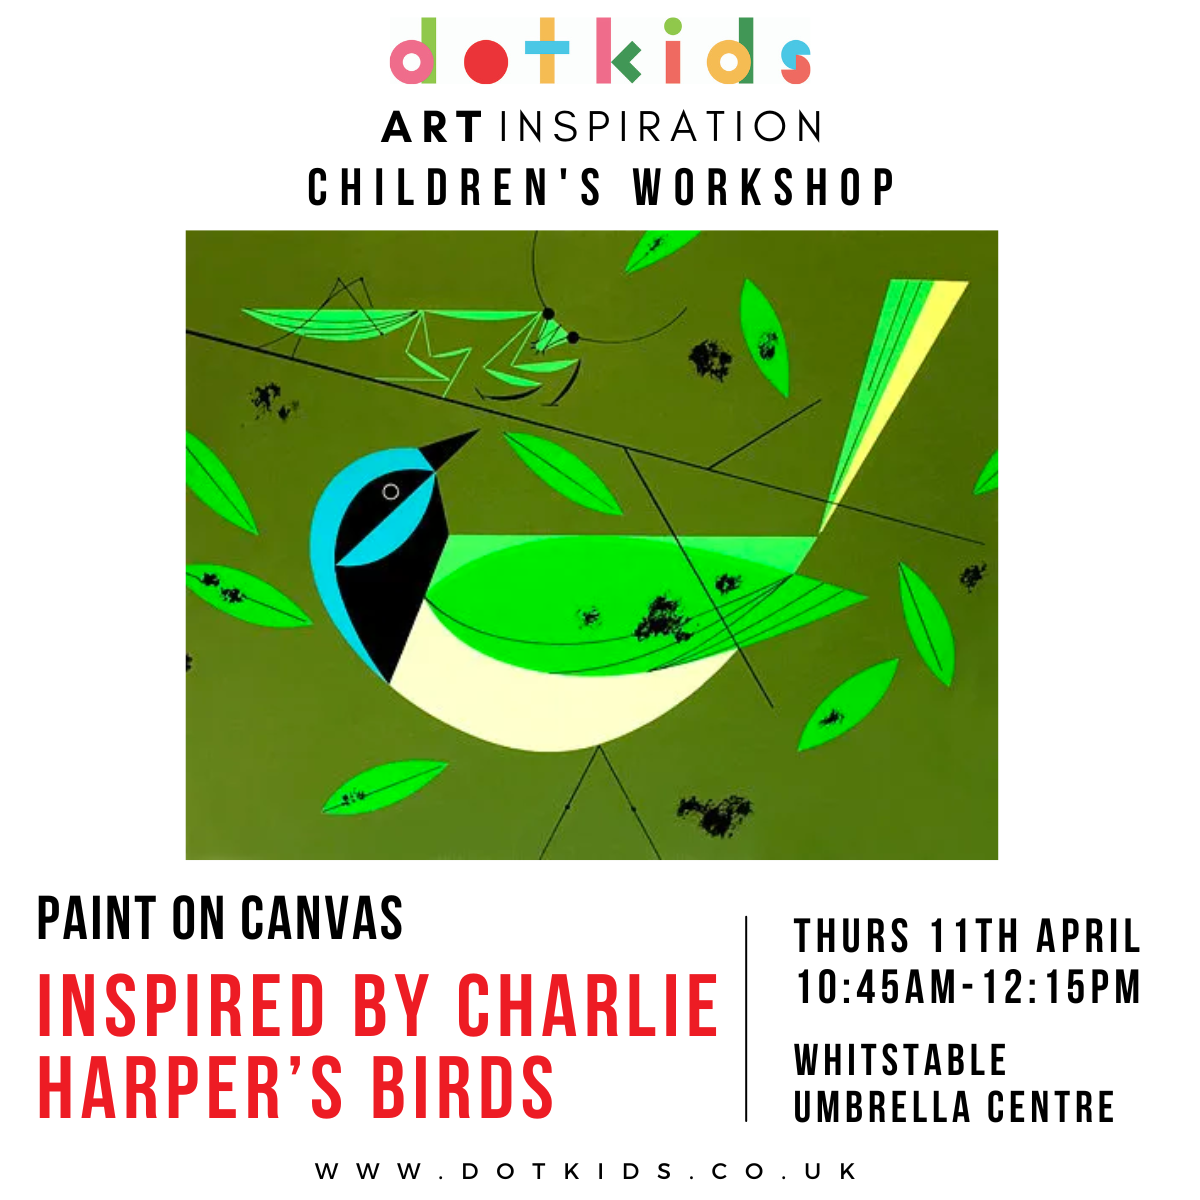 Charlie Harper's Birds Art Inspiration Workshop For Children